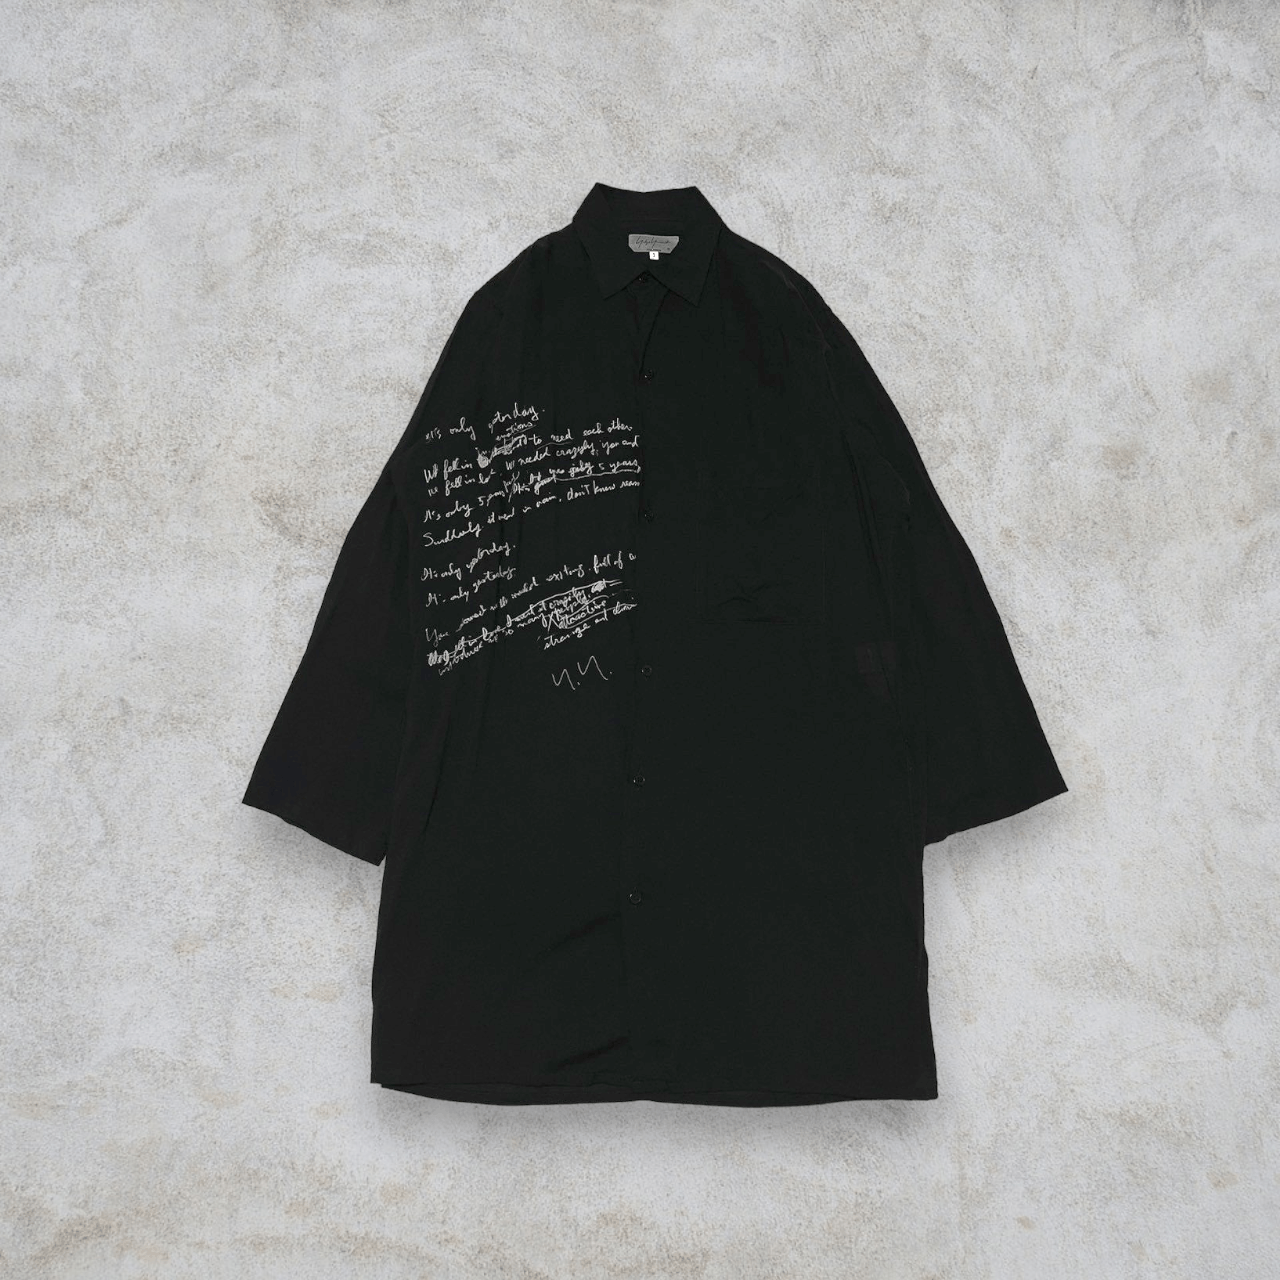 Yohji Yamamoto Pour Homme 19ss tencel lyric shirts HH-B62-295 | Grailed